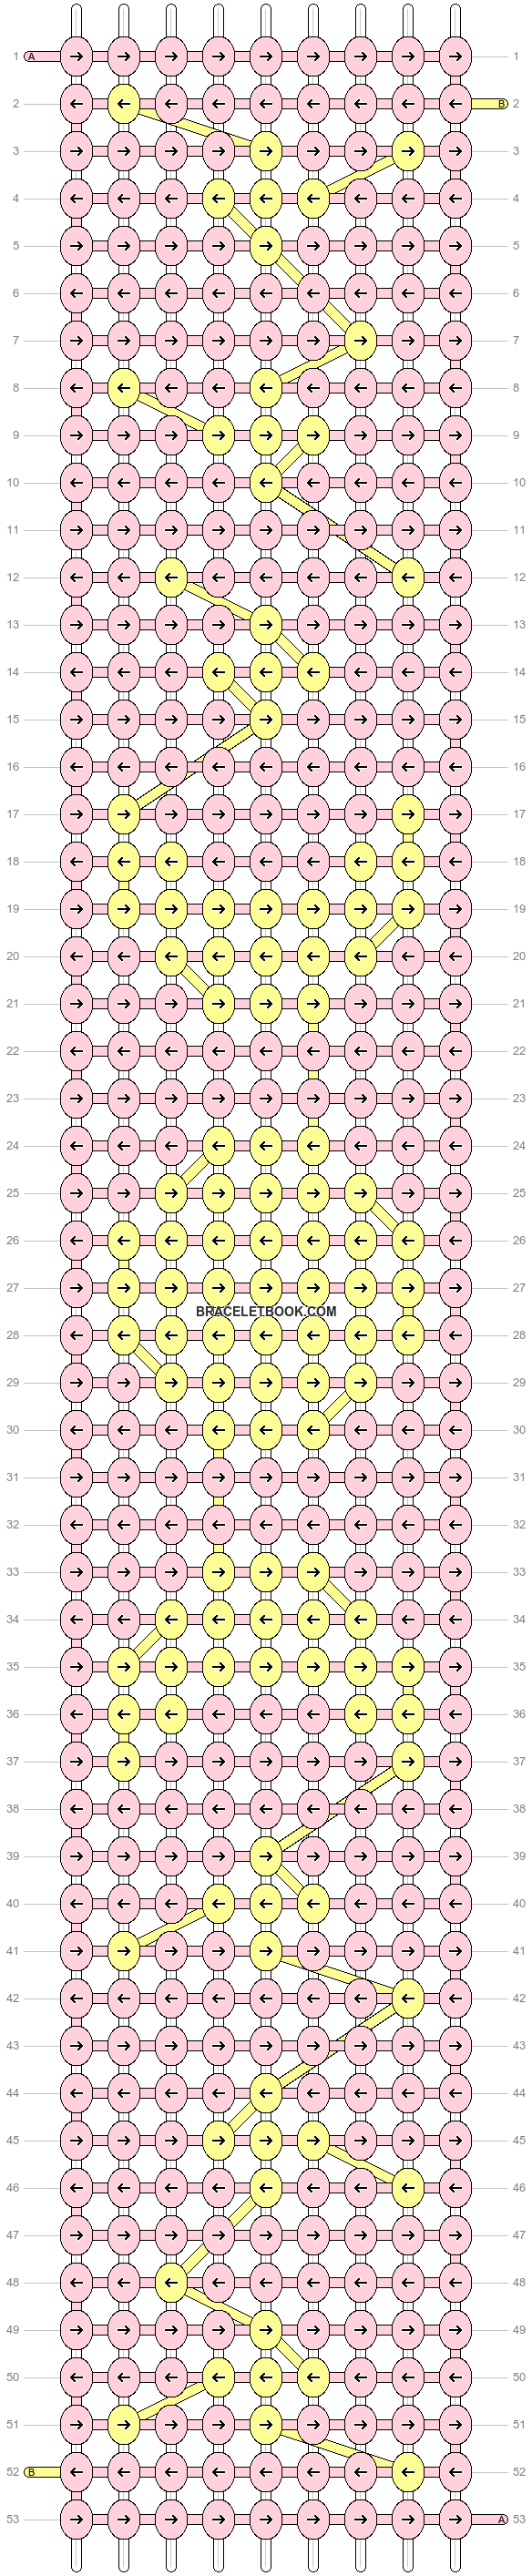 Alpha pattern #40067 variation #51232 pattern